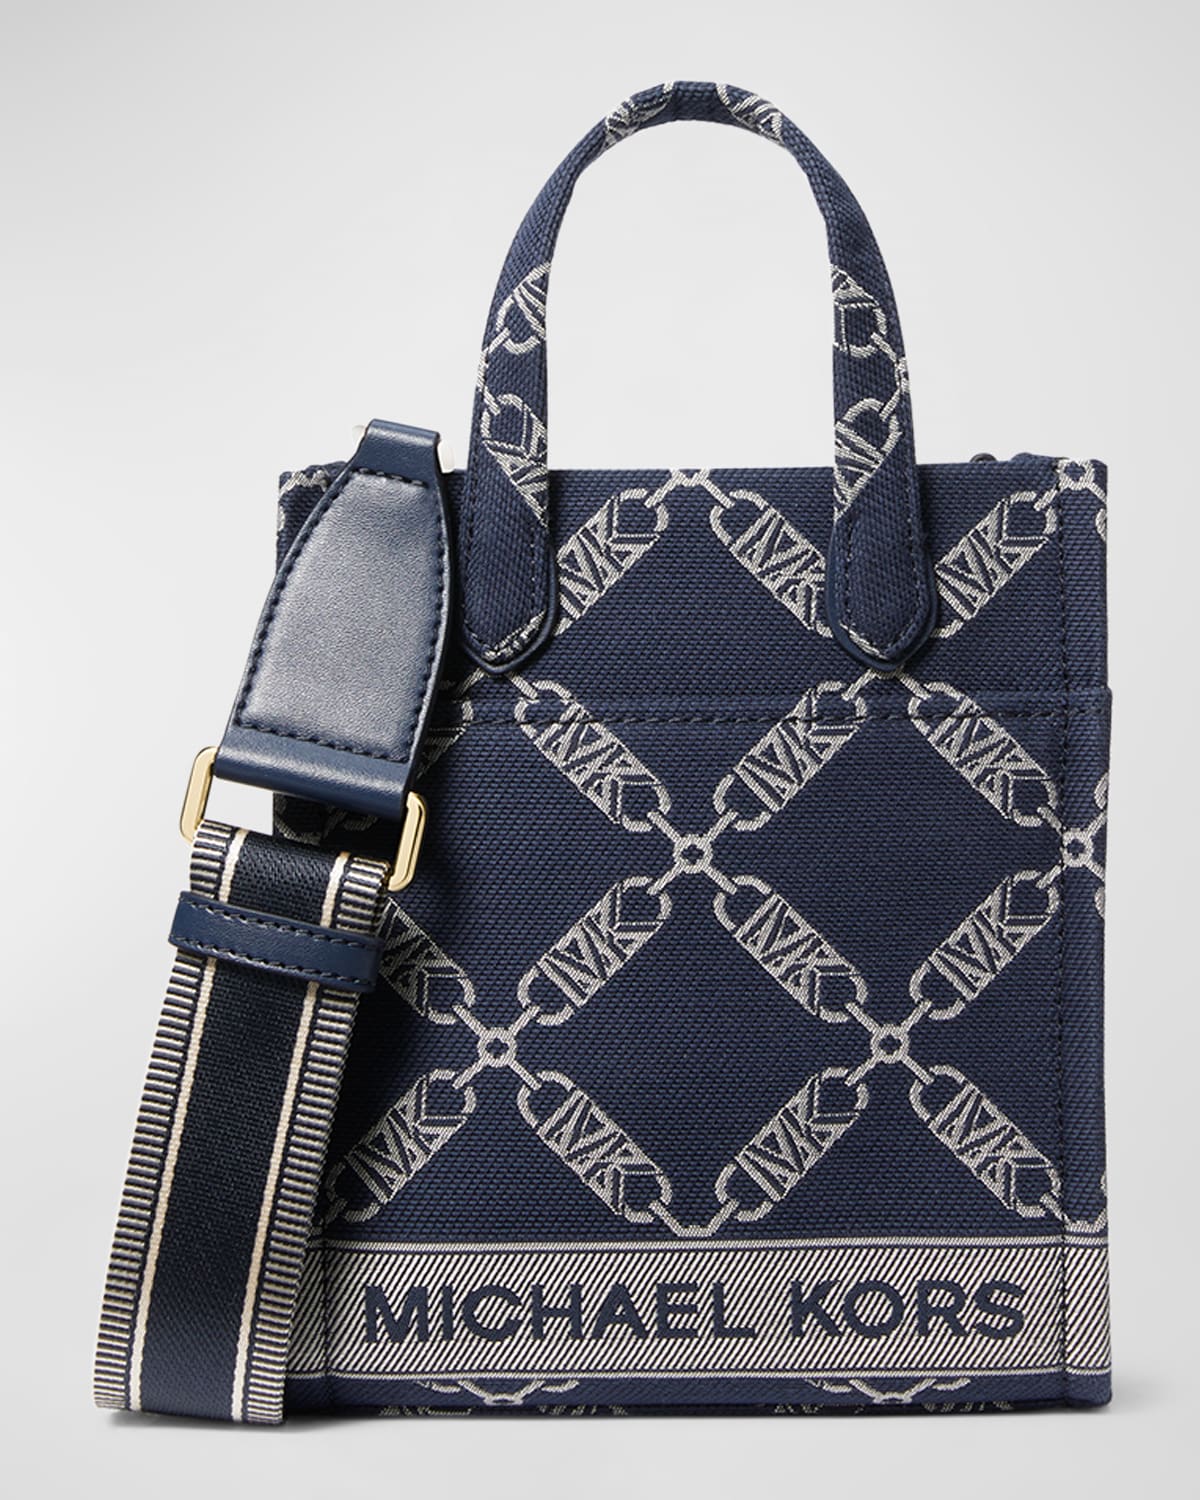 Michael Kors Black and Grey Leather Monogram Handbag For Sale at